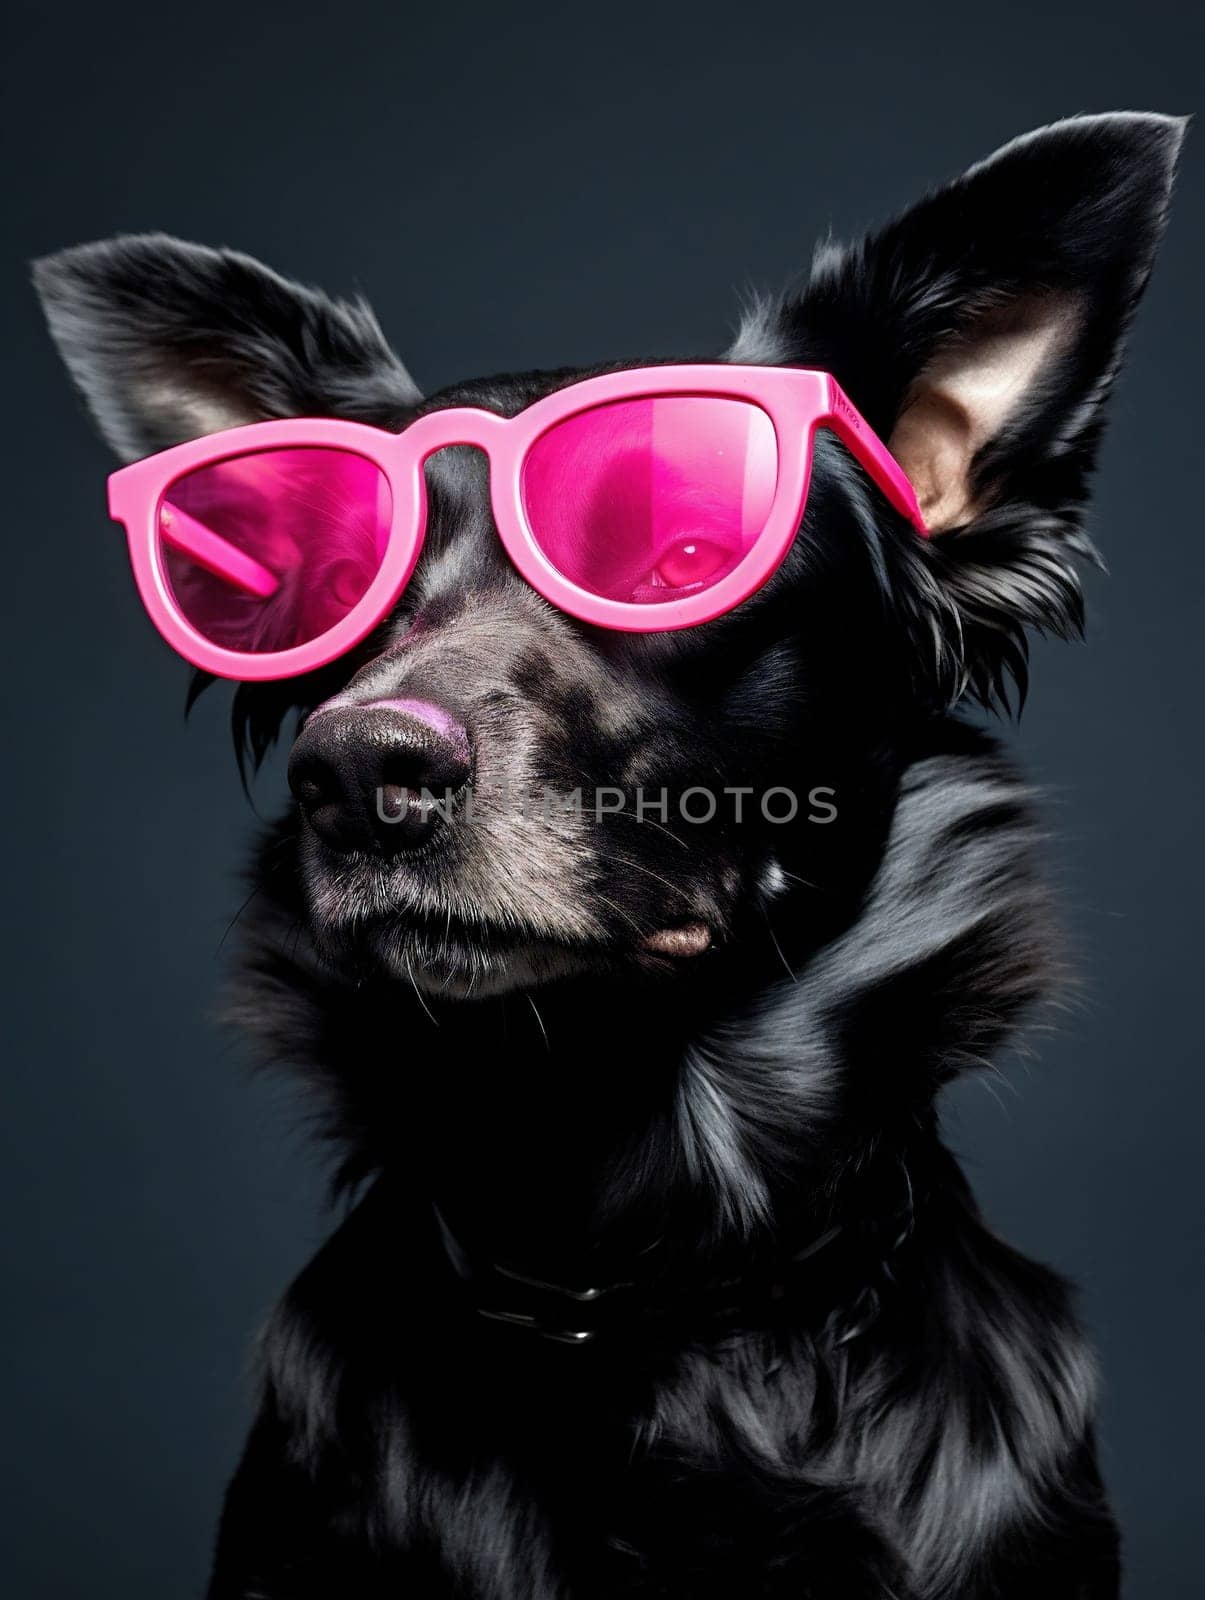 Sunglasses dog funny animal pet portrait glasses puppy cute happy by Vichizh